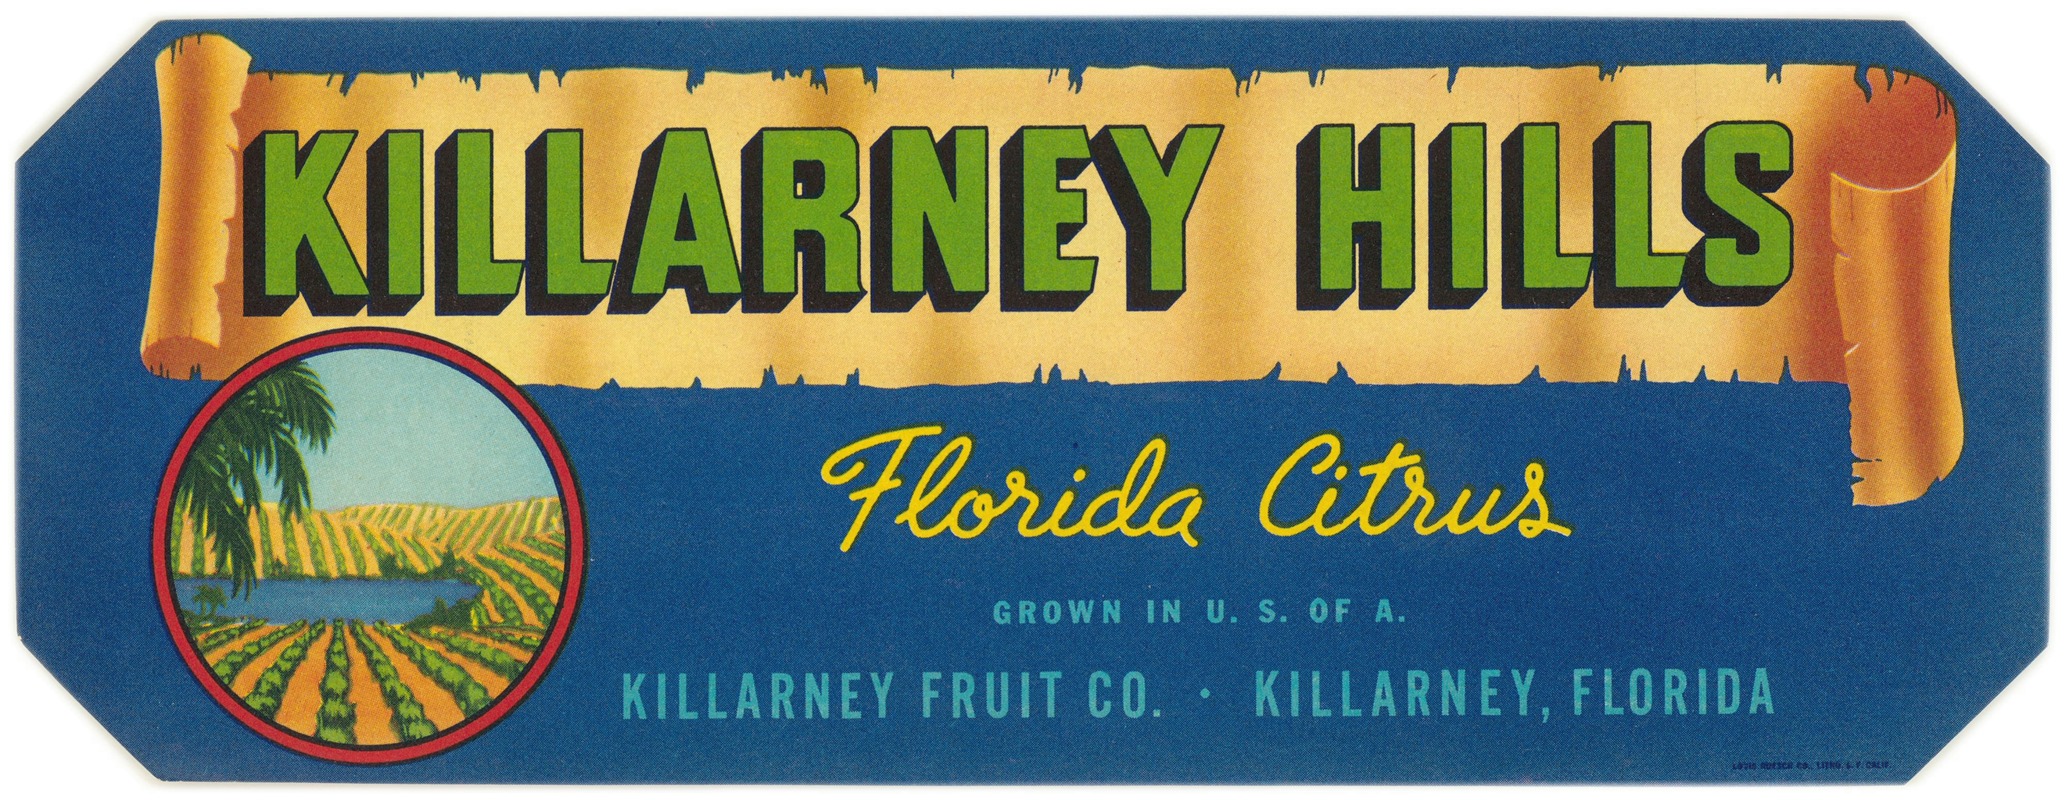 Anonymous - Killarney Hills Florida Citrus Label